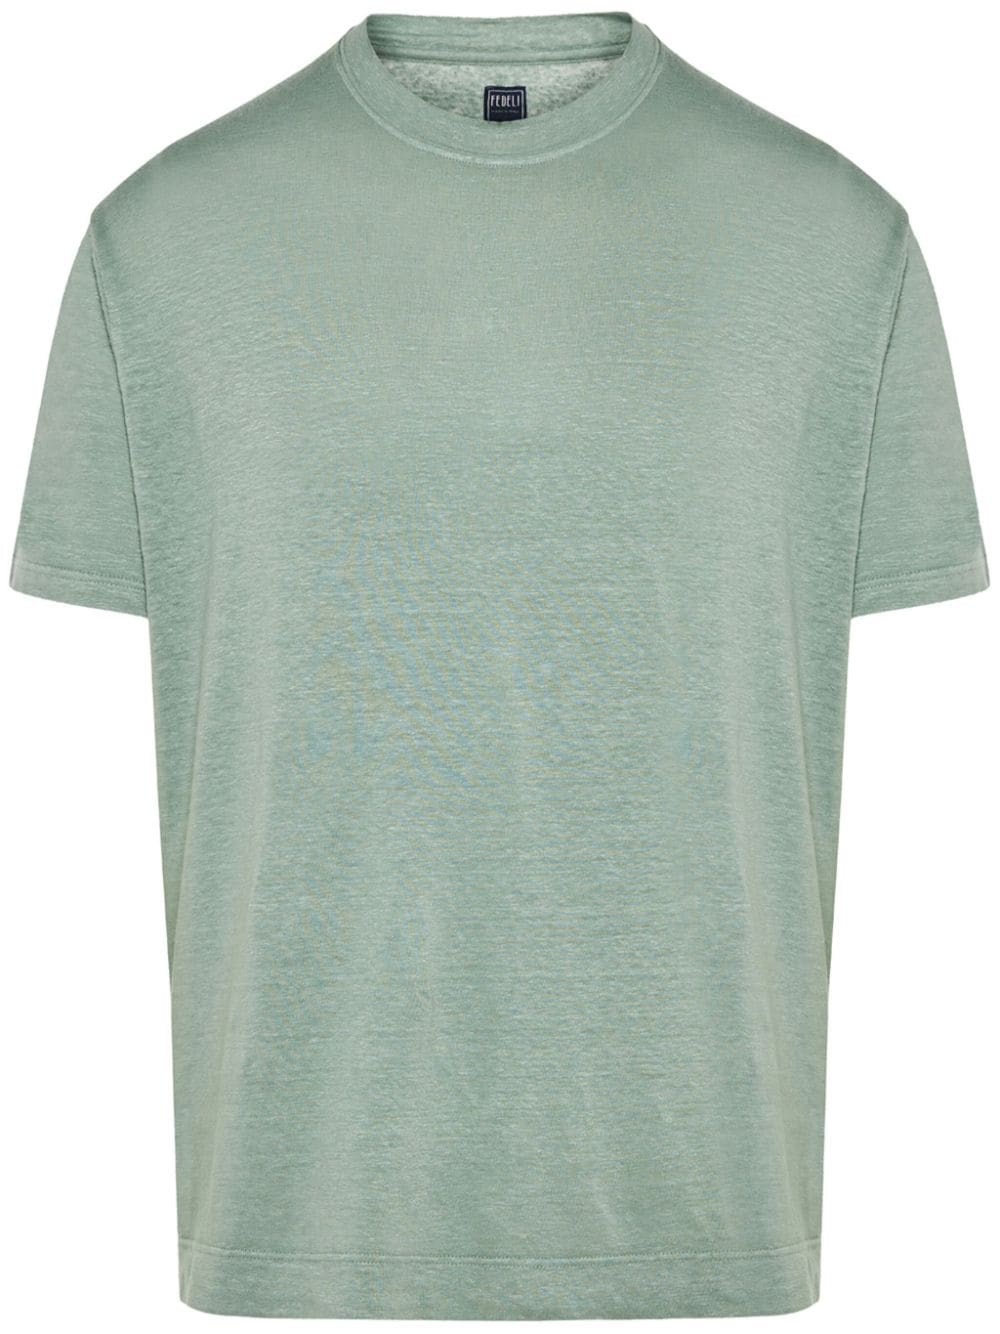 Fedeli Extreme cotton T-shirt - Green